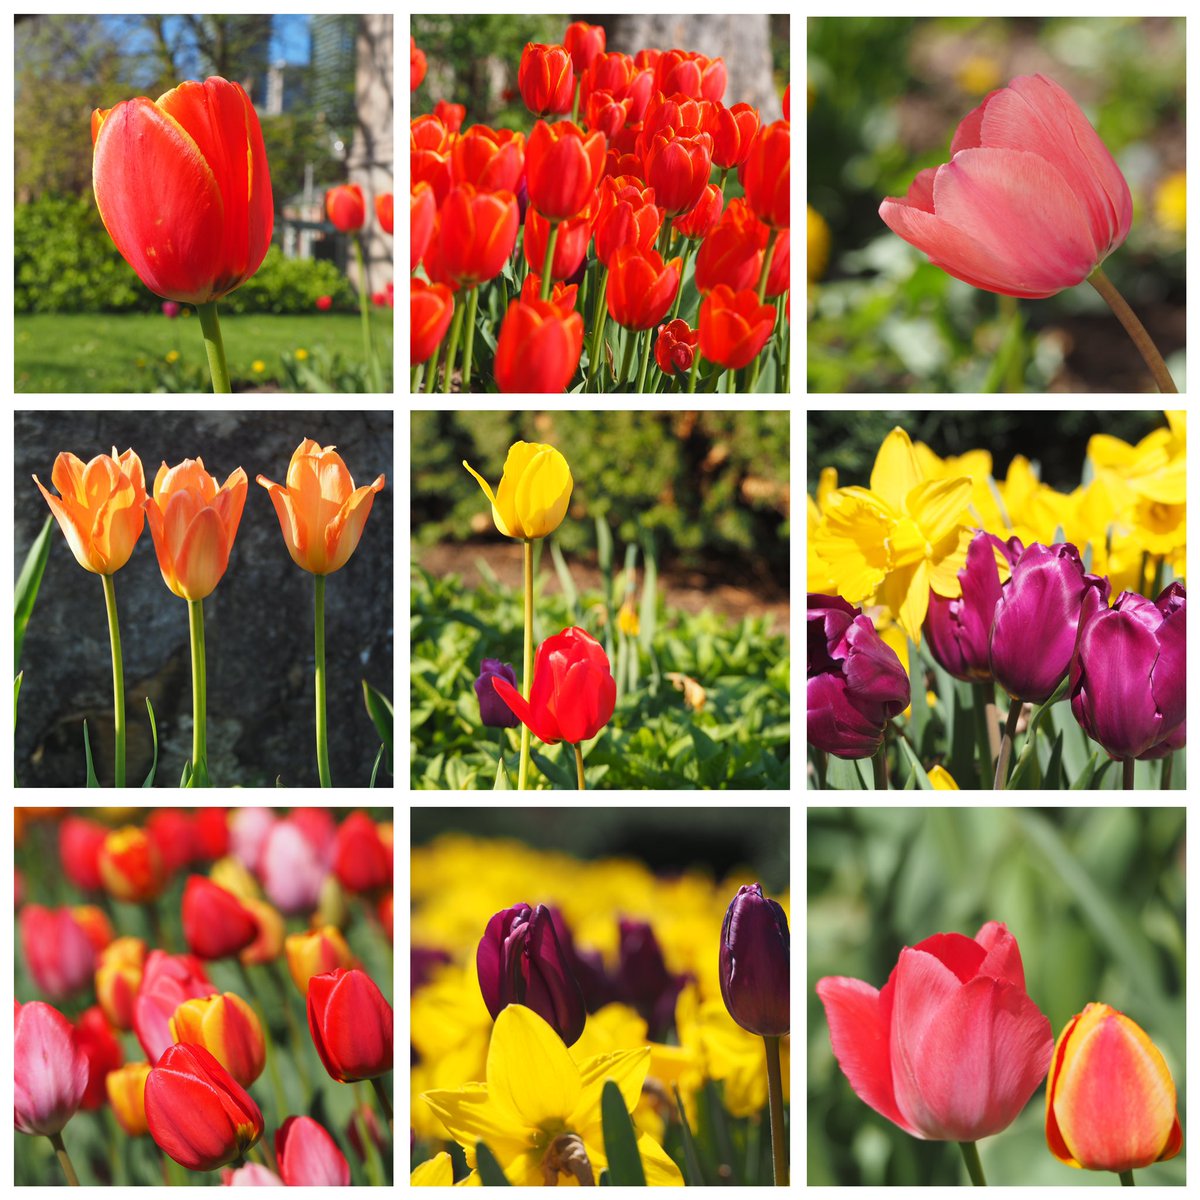 #spring #tulips #Toronto #Queenspark #tulipanes @jo_annie42 @jane_sparrow13 @ArtemisKellogg @vale__ri @littlemore20 @xobreex3 @BillMontei @StormHour @ThePhotoHour @admired_art @SiKImagery @salina_mills @VisualsbySauter @ArtemisKellogg @MrWhoCapture